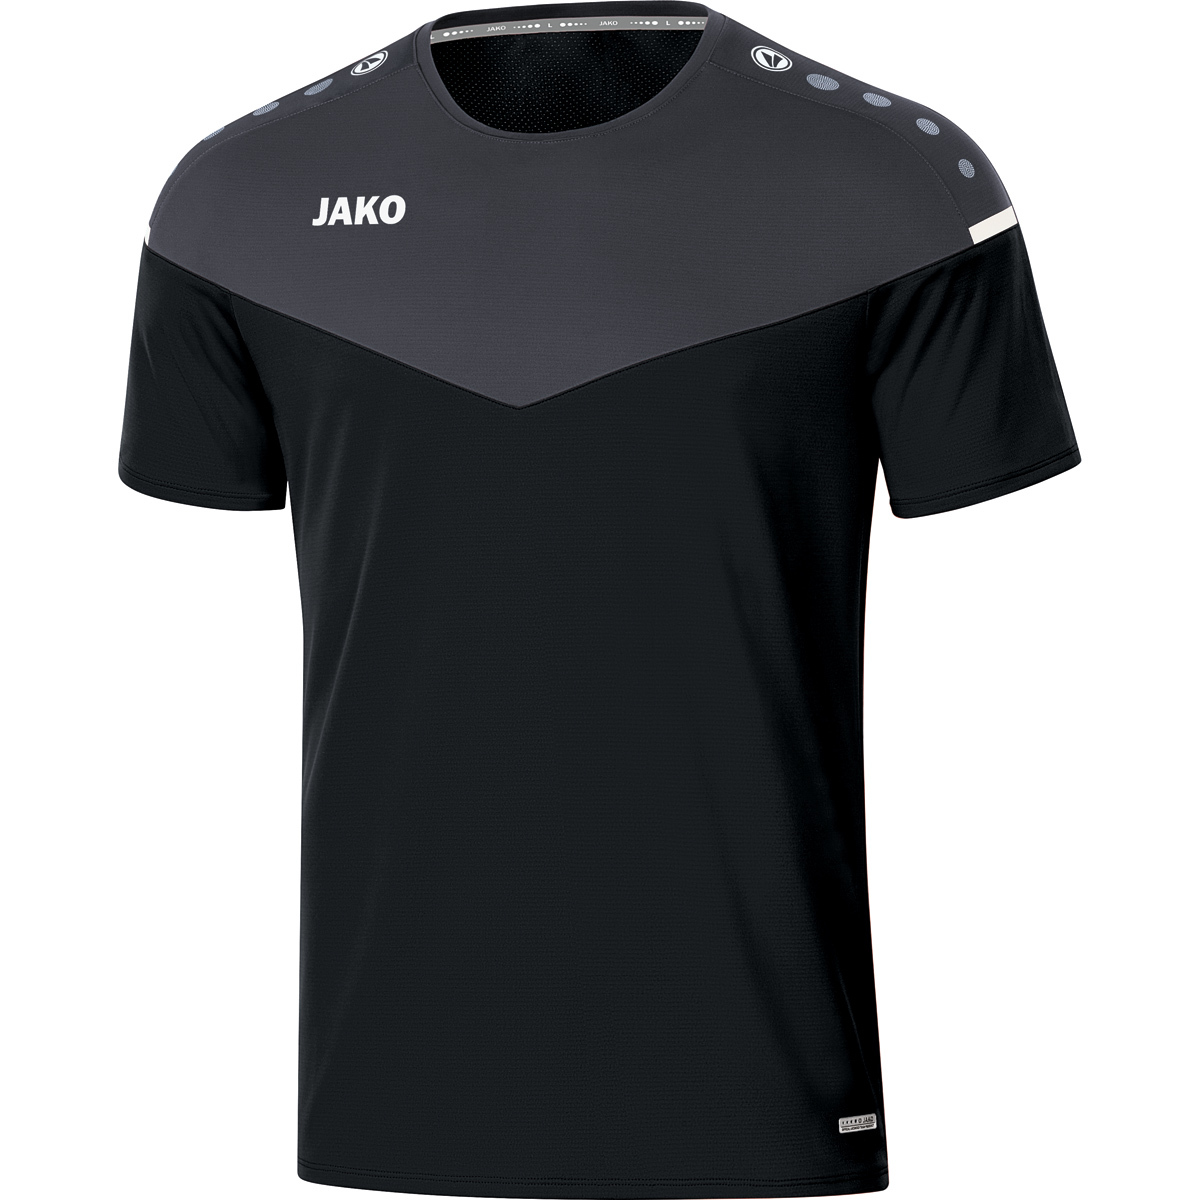 JAKO T-Shirt Champ XXL, Herren, 6120 Gr. schwarz/anthrazit, 2.0